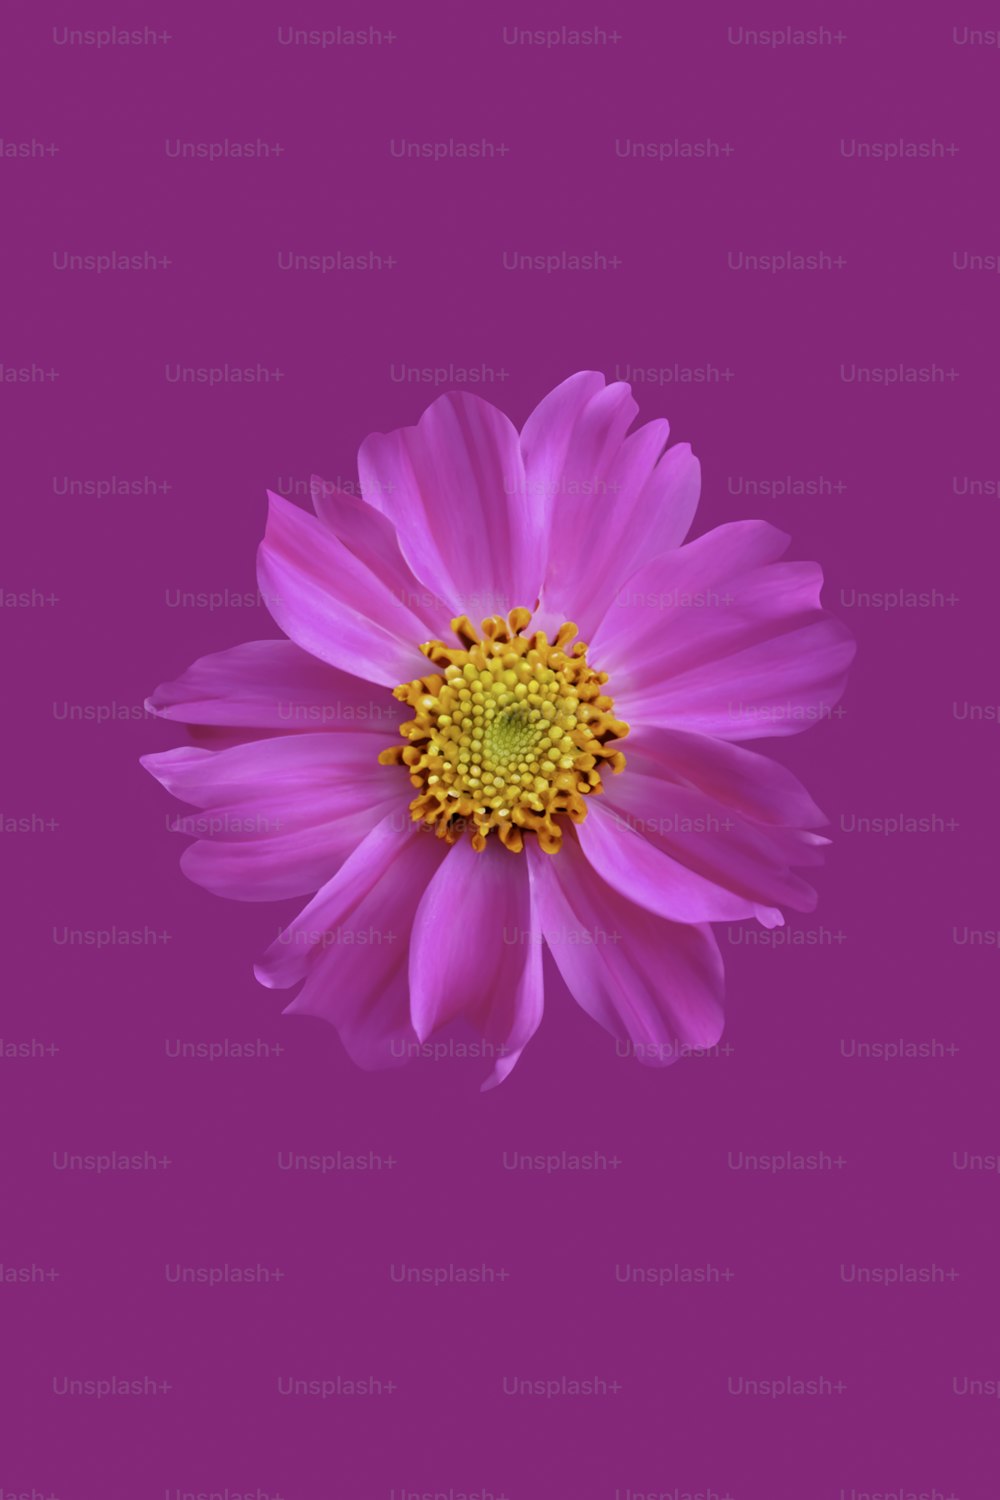 una flor rosa con un centro amarillo sobre un fondo rosa